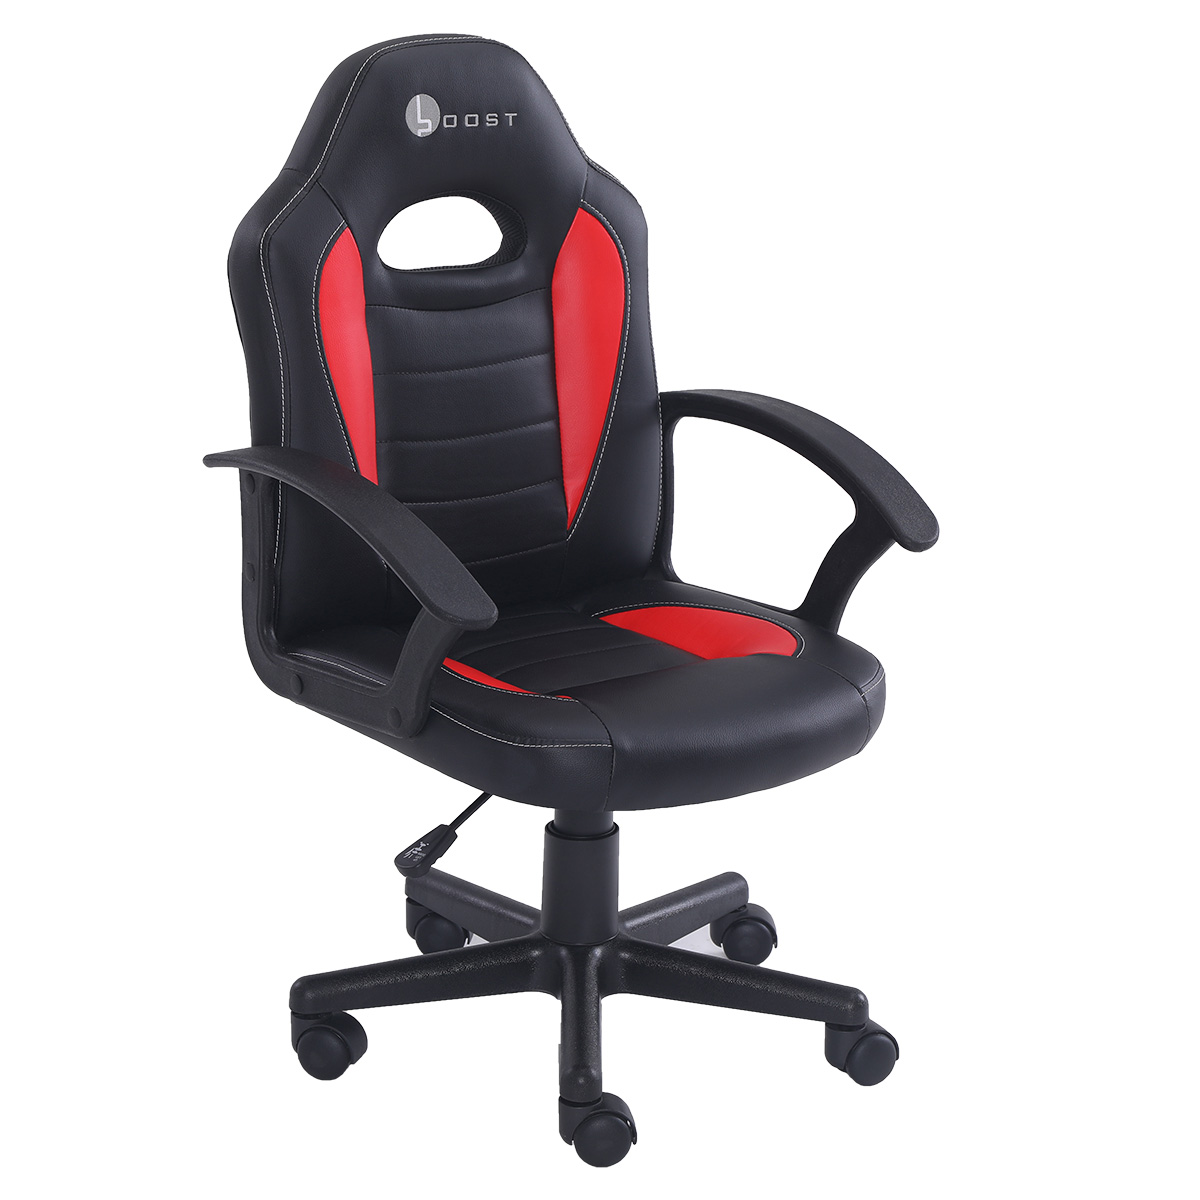 KC373-BR Black/Red Children's Chair